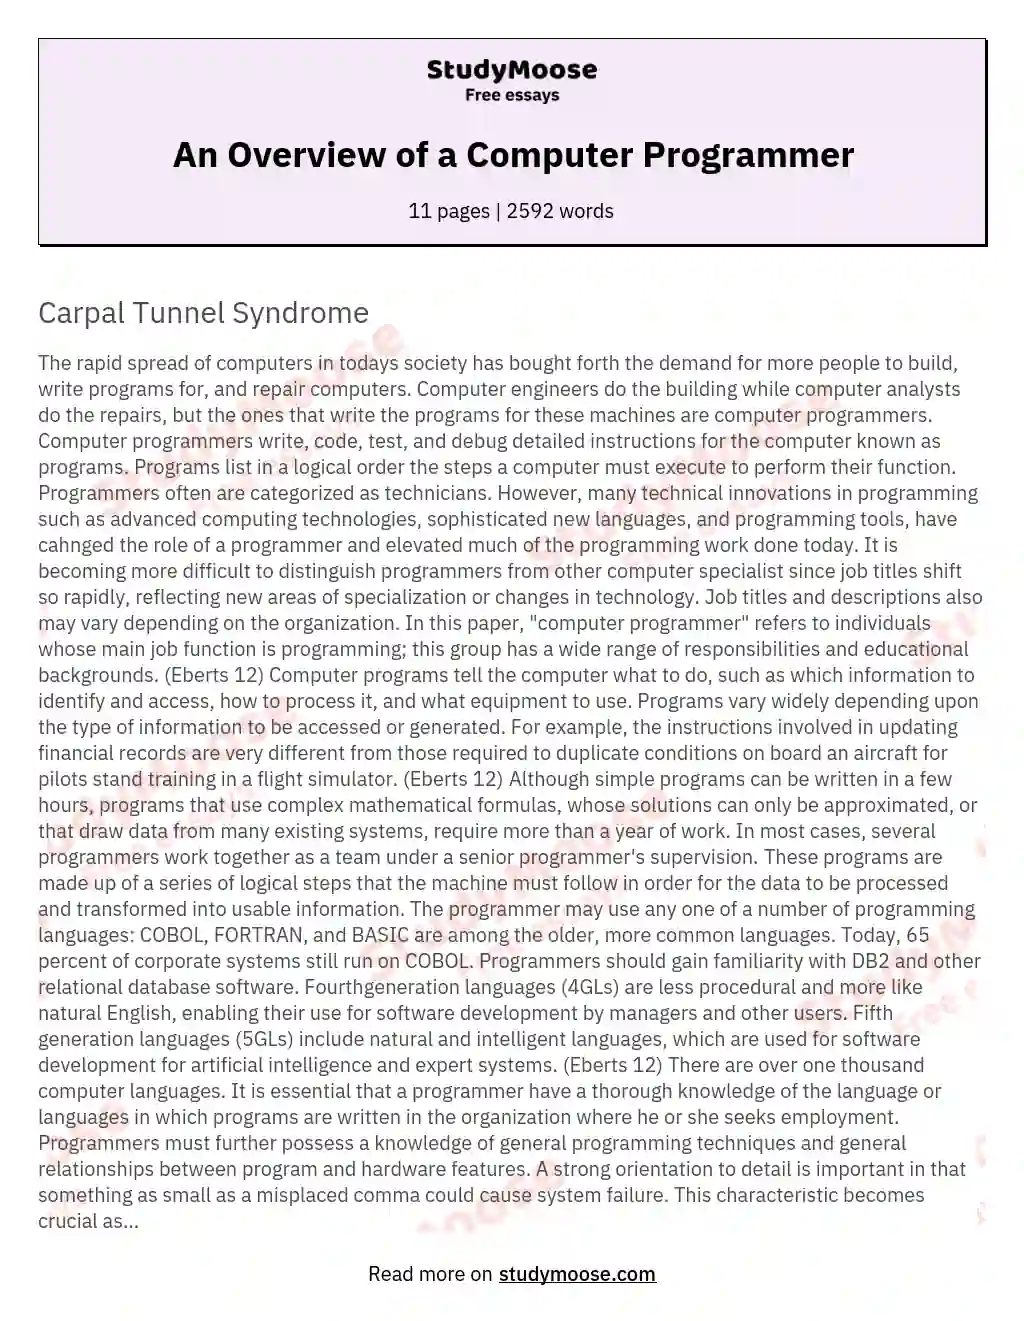 An Overview of a Computer Programmer essay